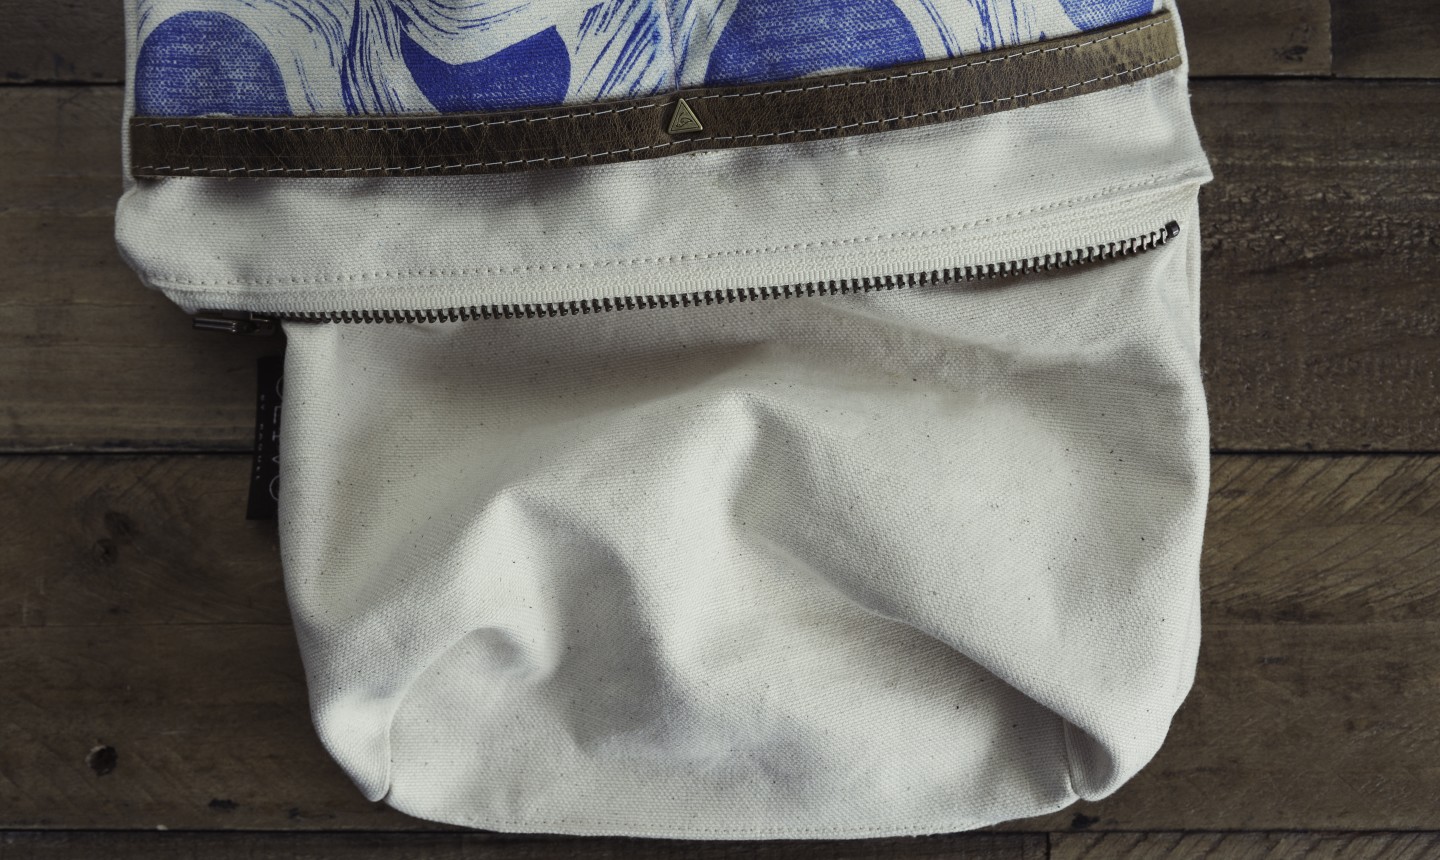 closing lining of zipper pouch